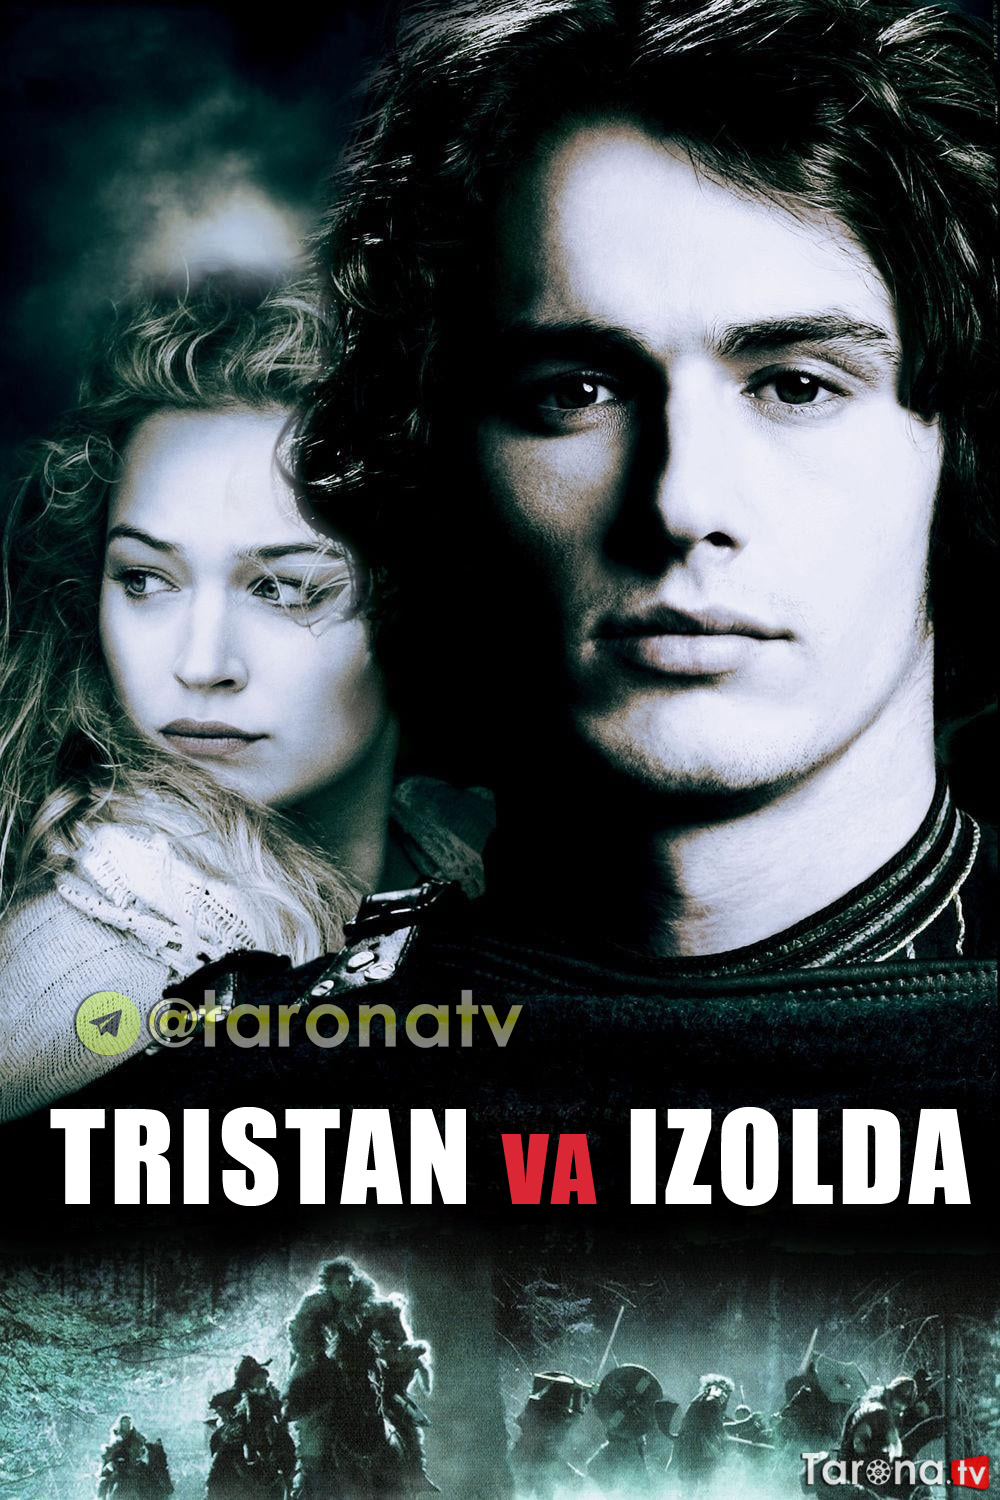 Tristan va Izolda (Jangari romontika, O'zbekcha tarjima) 2006